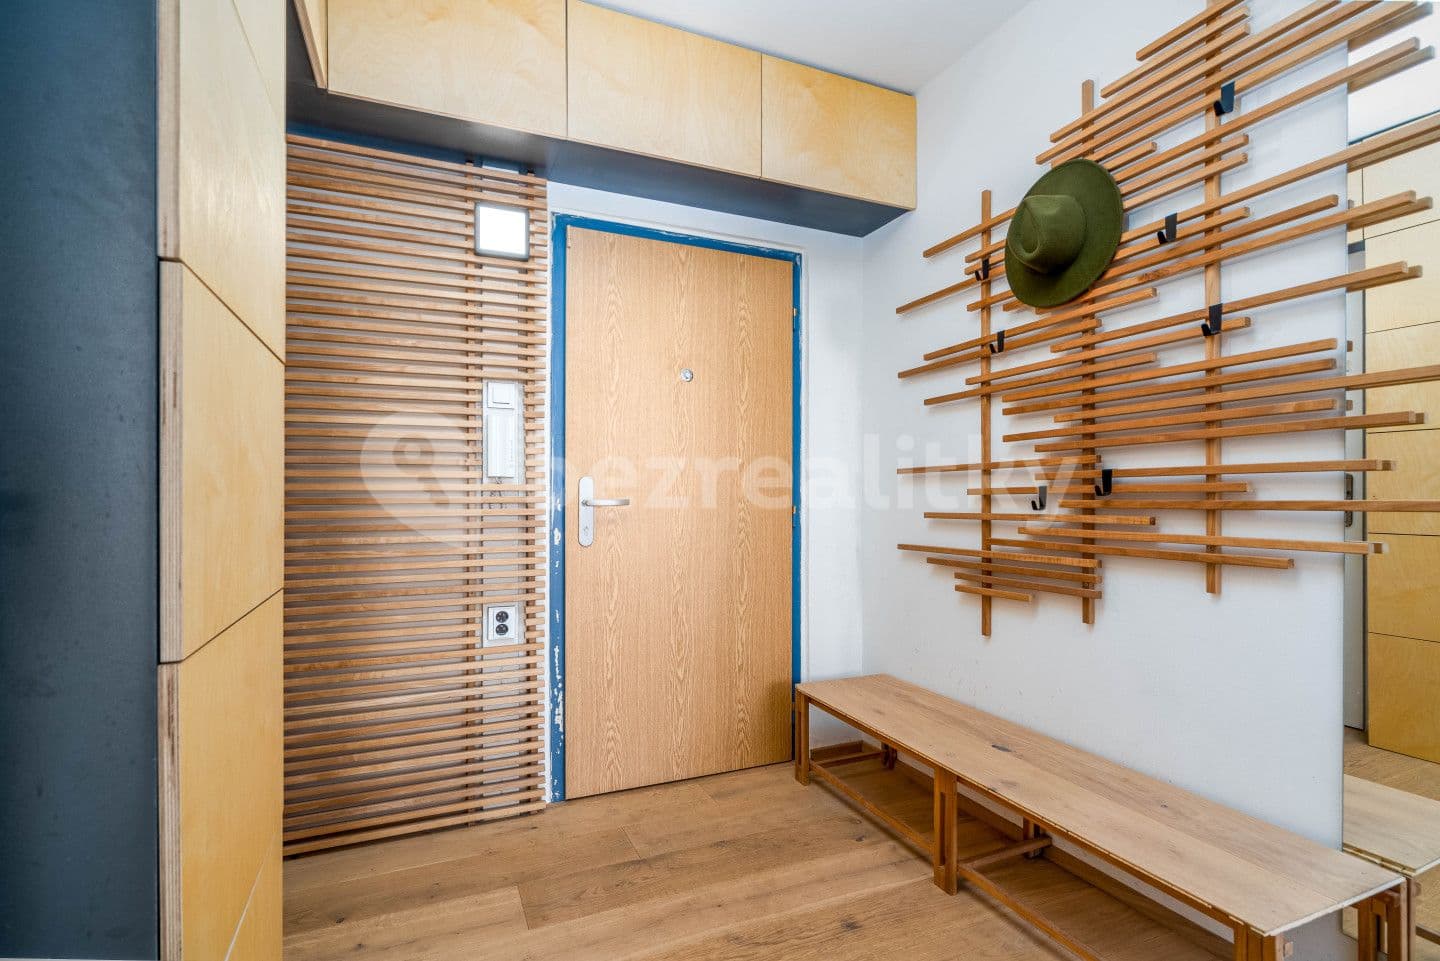 1 bedroom with open-plan kitchen flat for sale, 40 m², Makovského, Prague, Prague